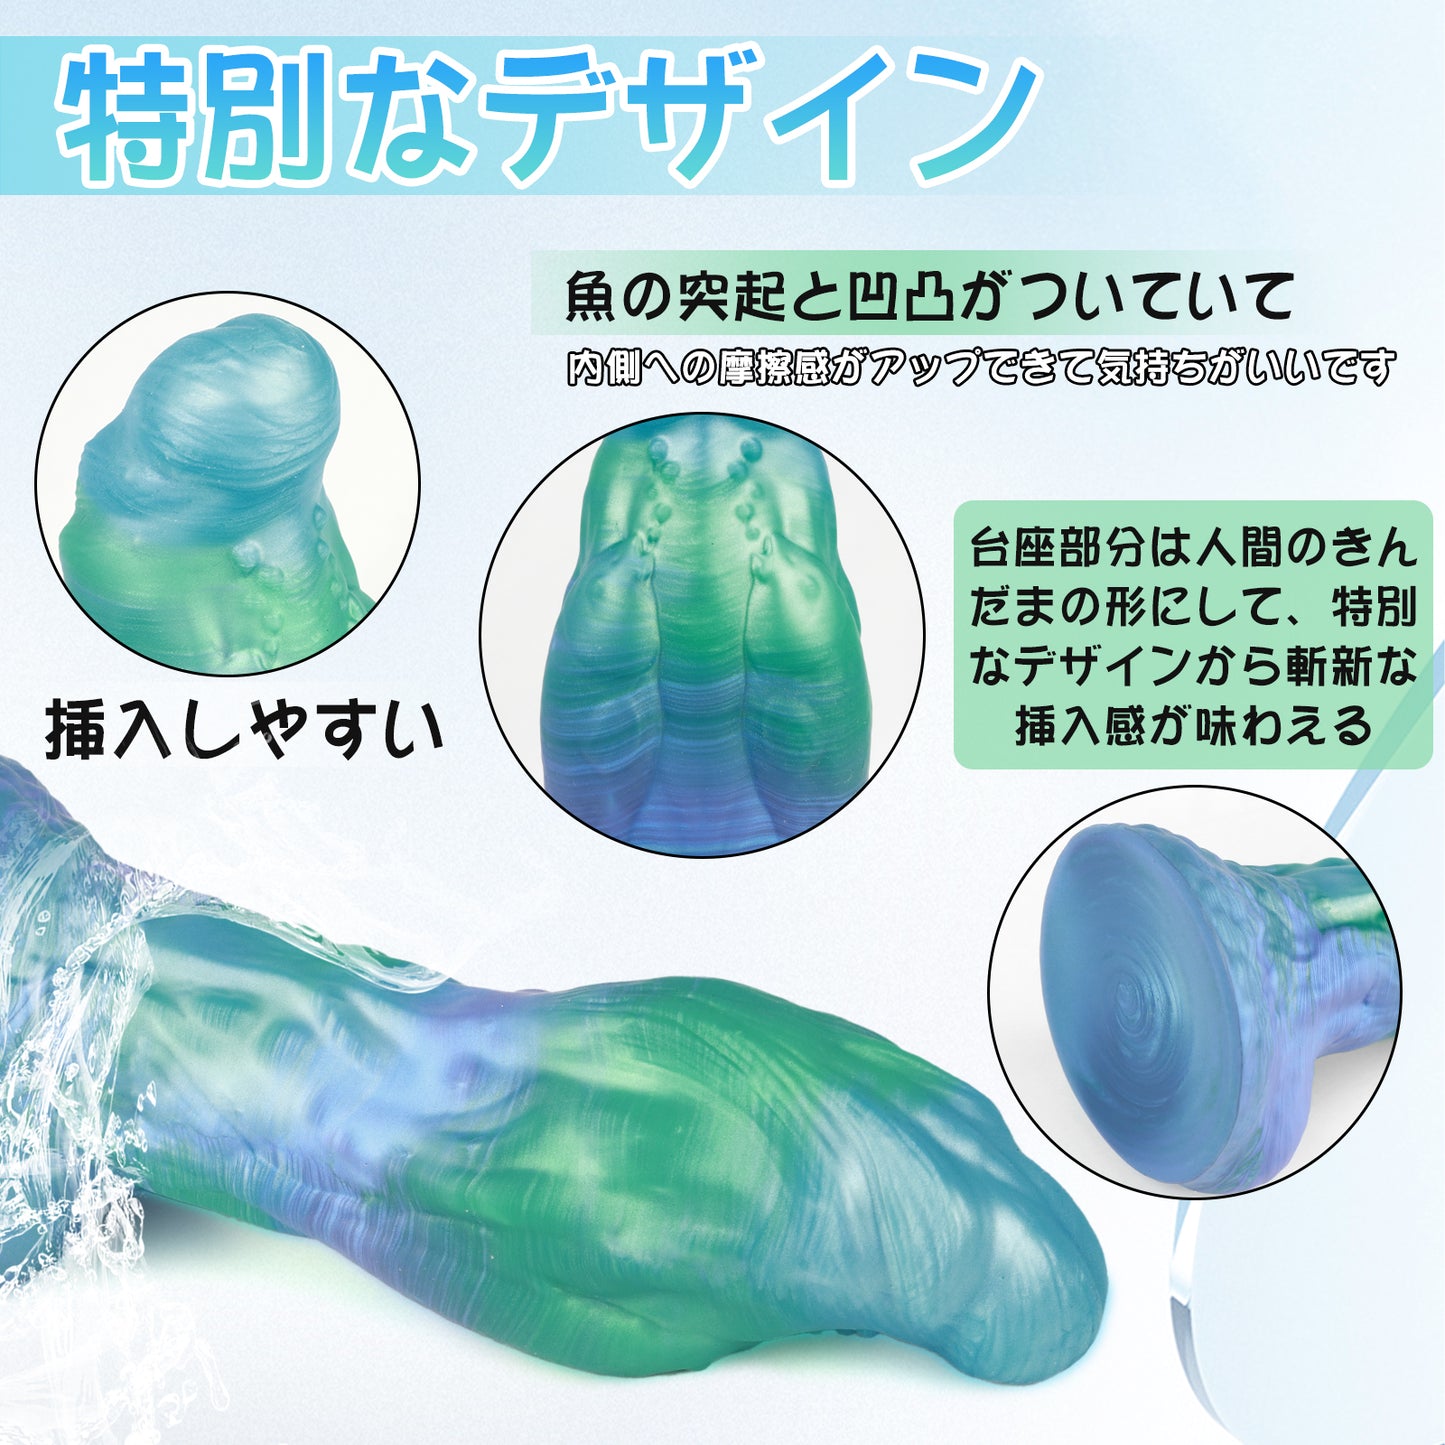 maparon ryugyo肛门塞肛门发育G点刺激公寓有一个带有蓝色液体硅的基座